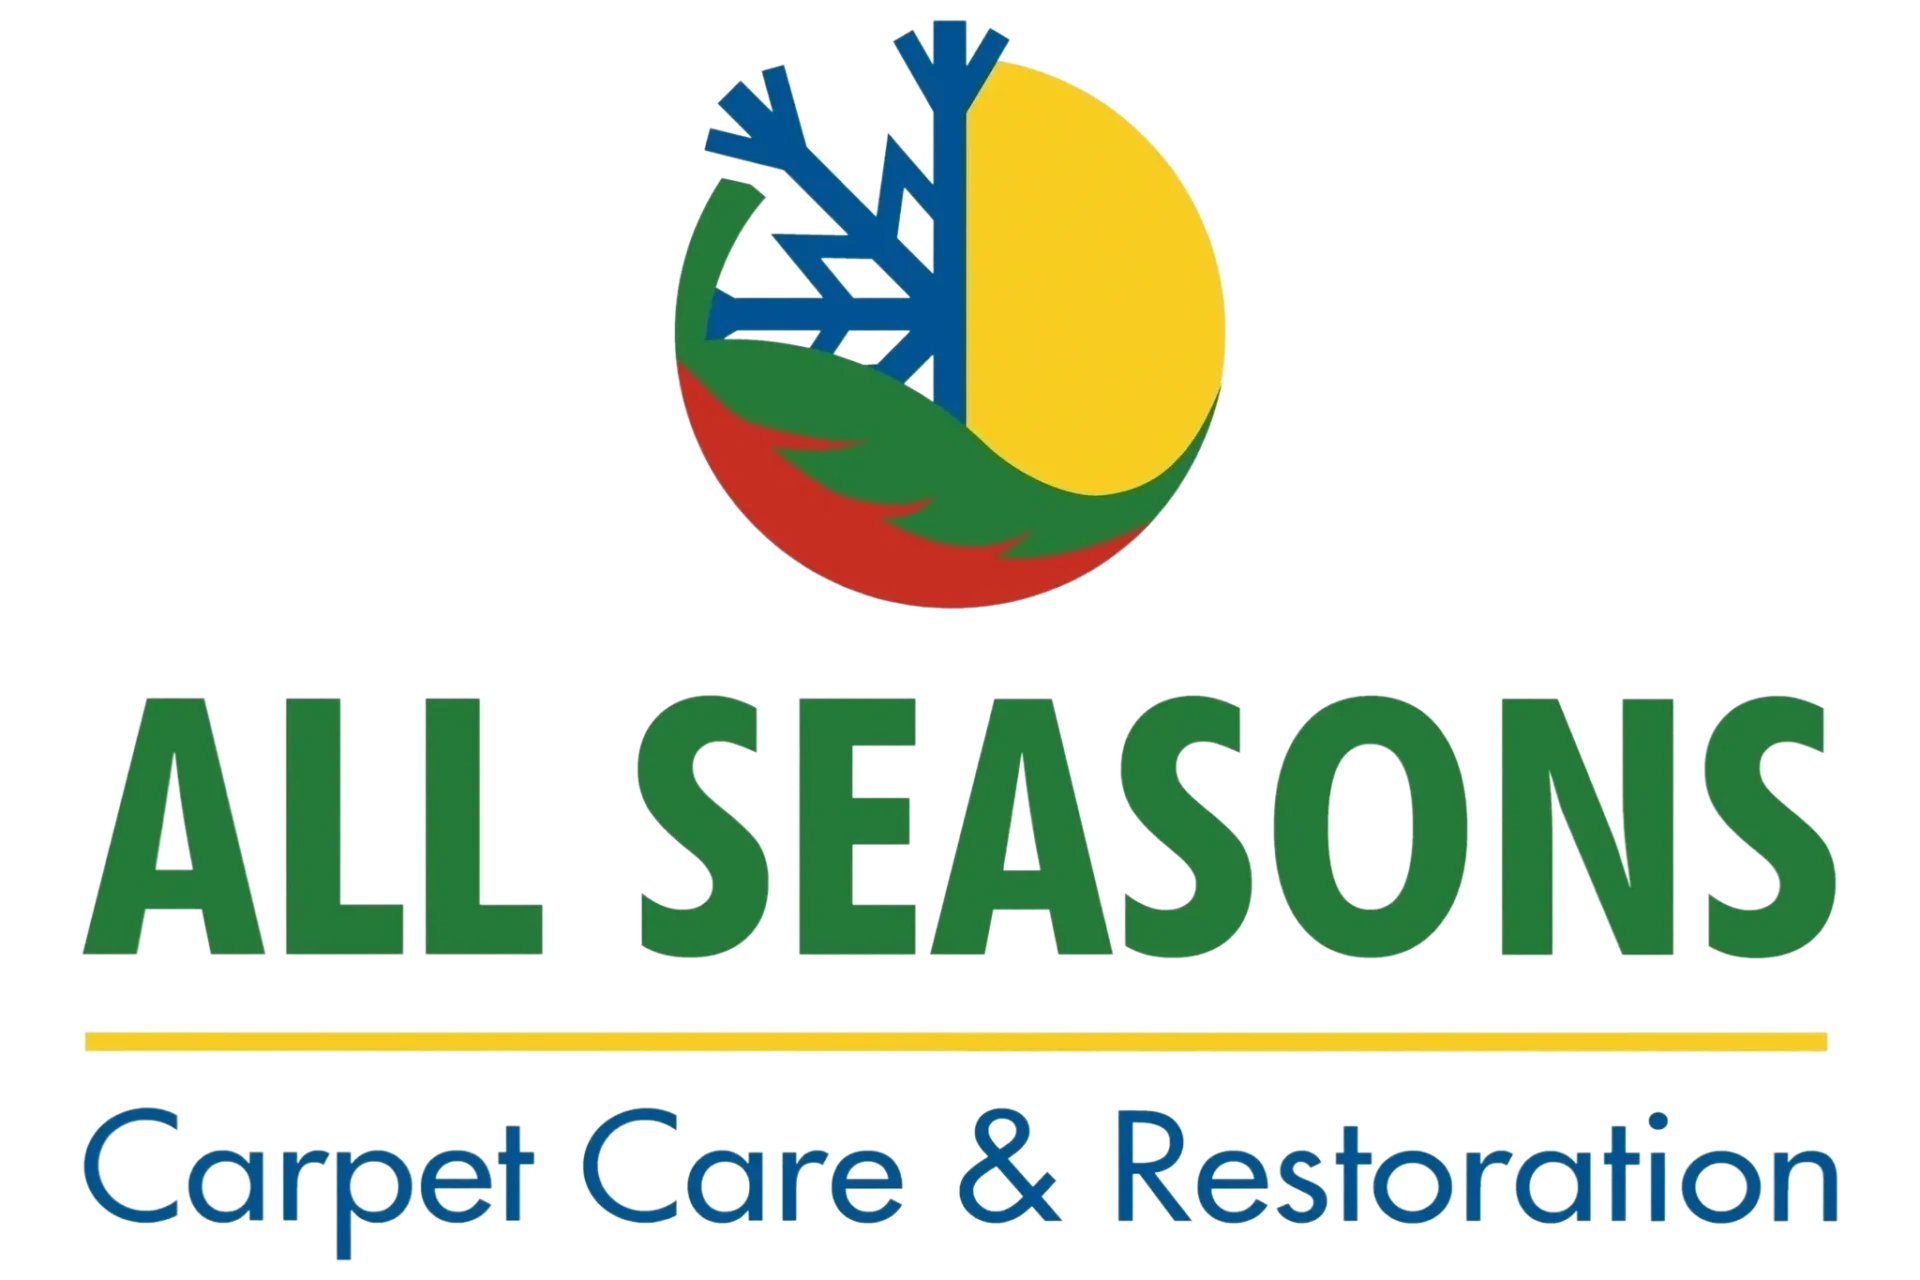 A logo of all seasons carpet care and restoration.